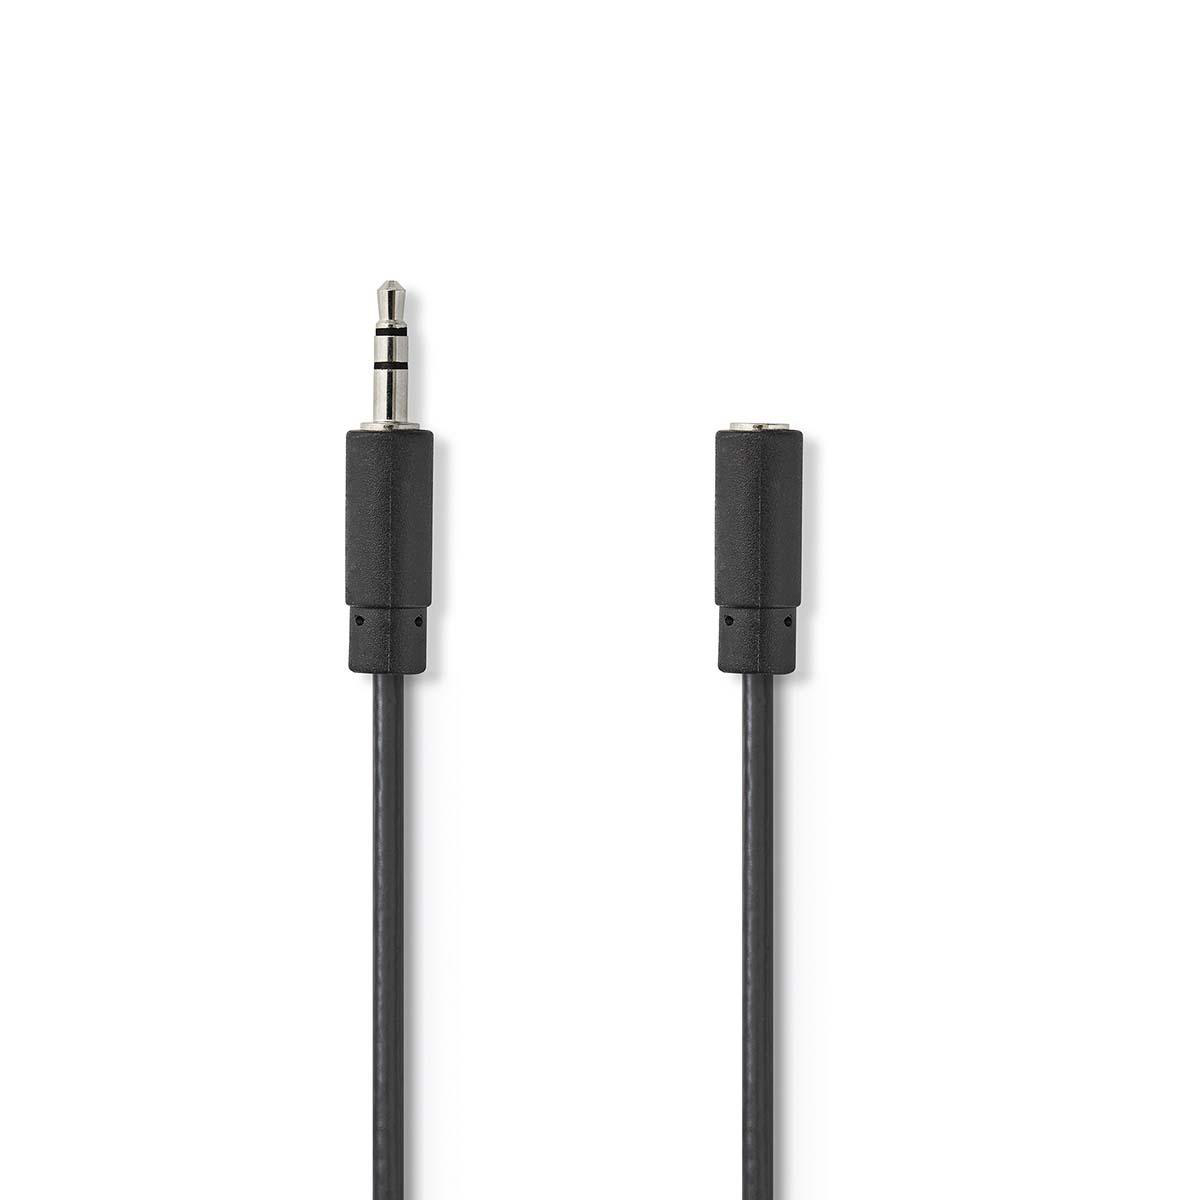 Nedis Stereo Audio kabel, 3.5 mm Male - 3.5 mm Female, 2m, zwart